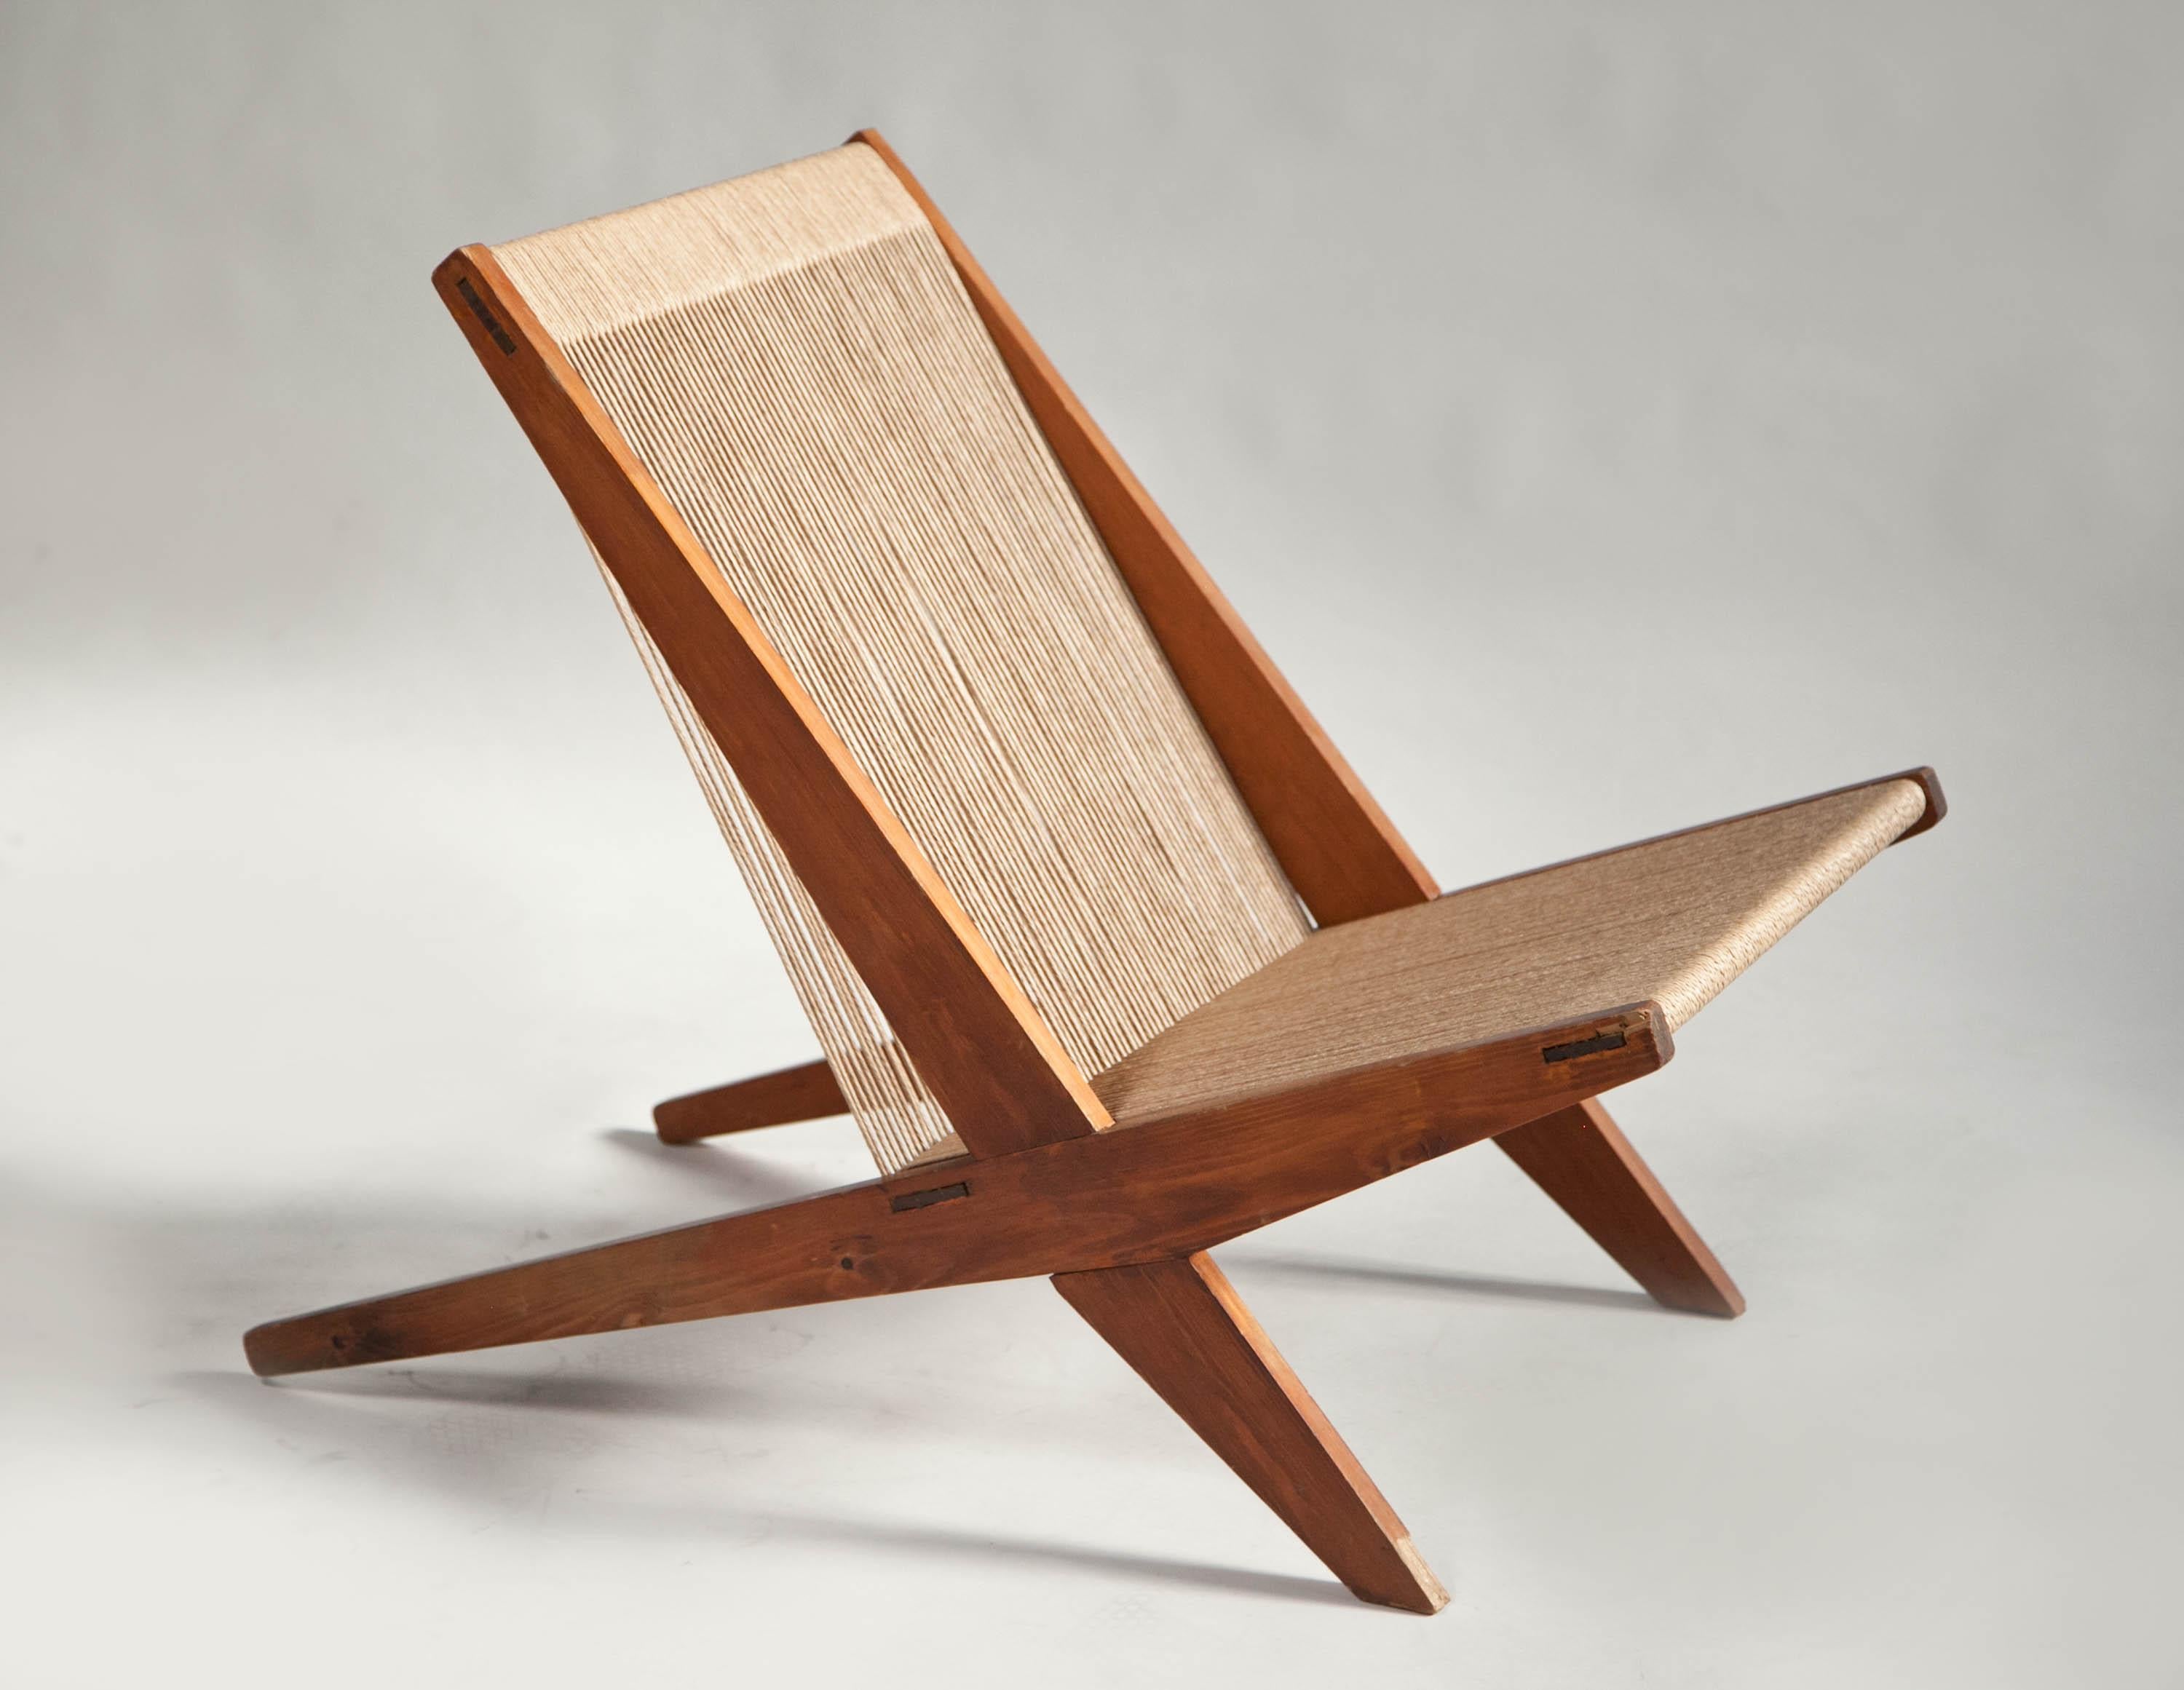 20th Century Rope Chair in Pine, Attributed to Poul Kjaerholm & Jørgen Høj, Denmark, 1960's For Sale